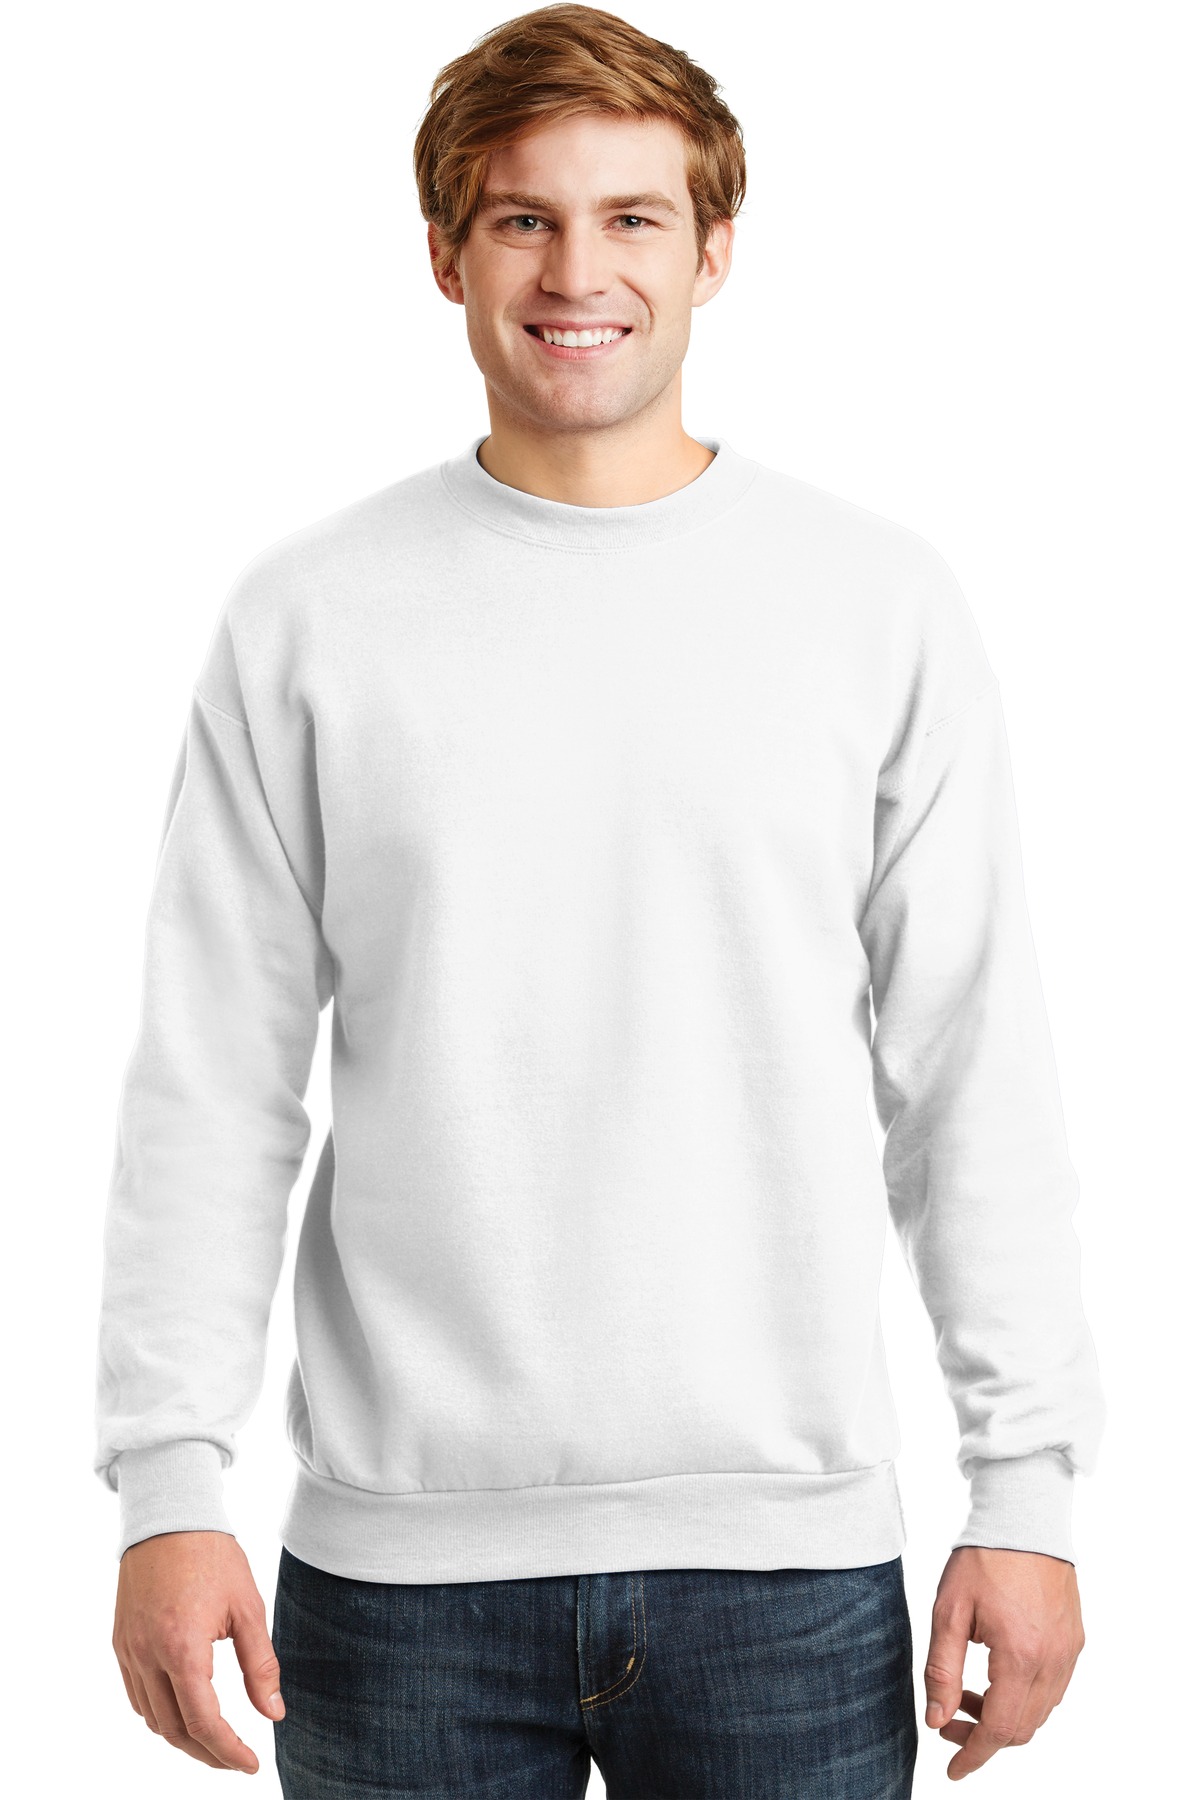 Hanes ®  – EcoSmart ®  Crewneck Sweatshirt.  P160